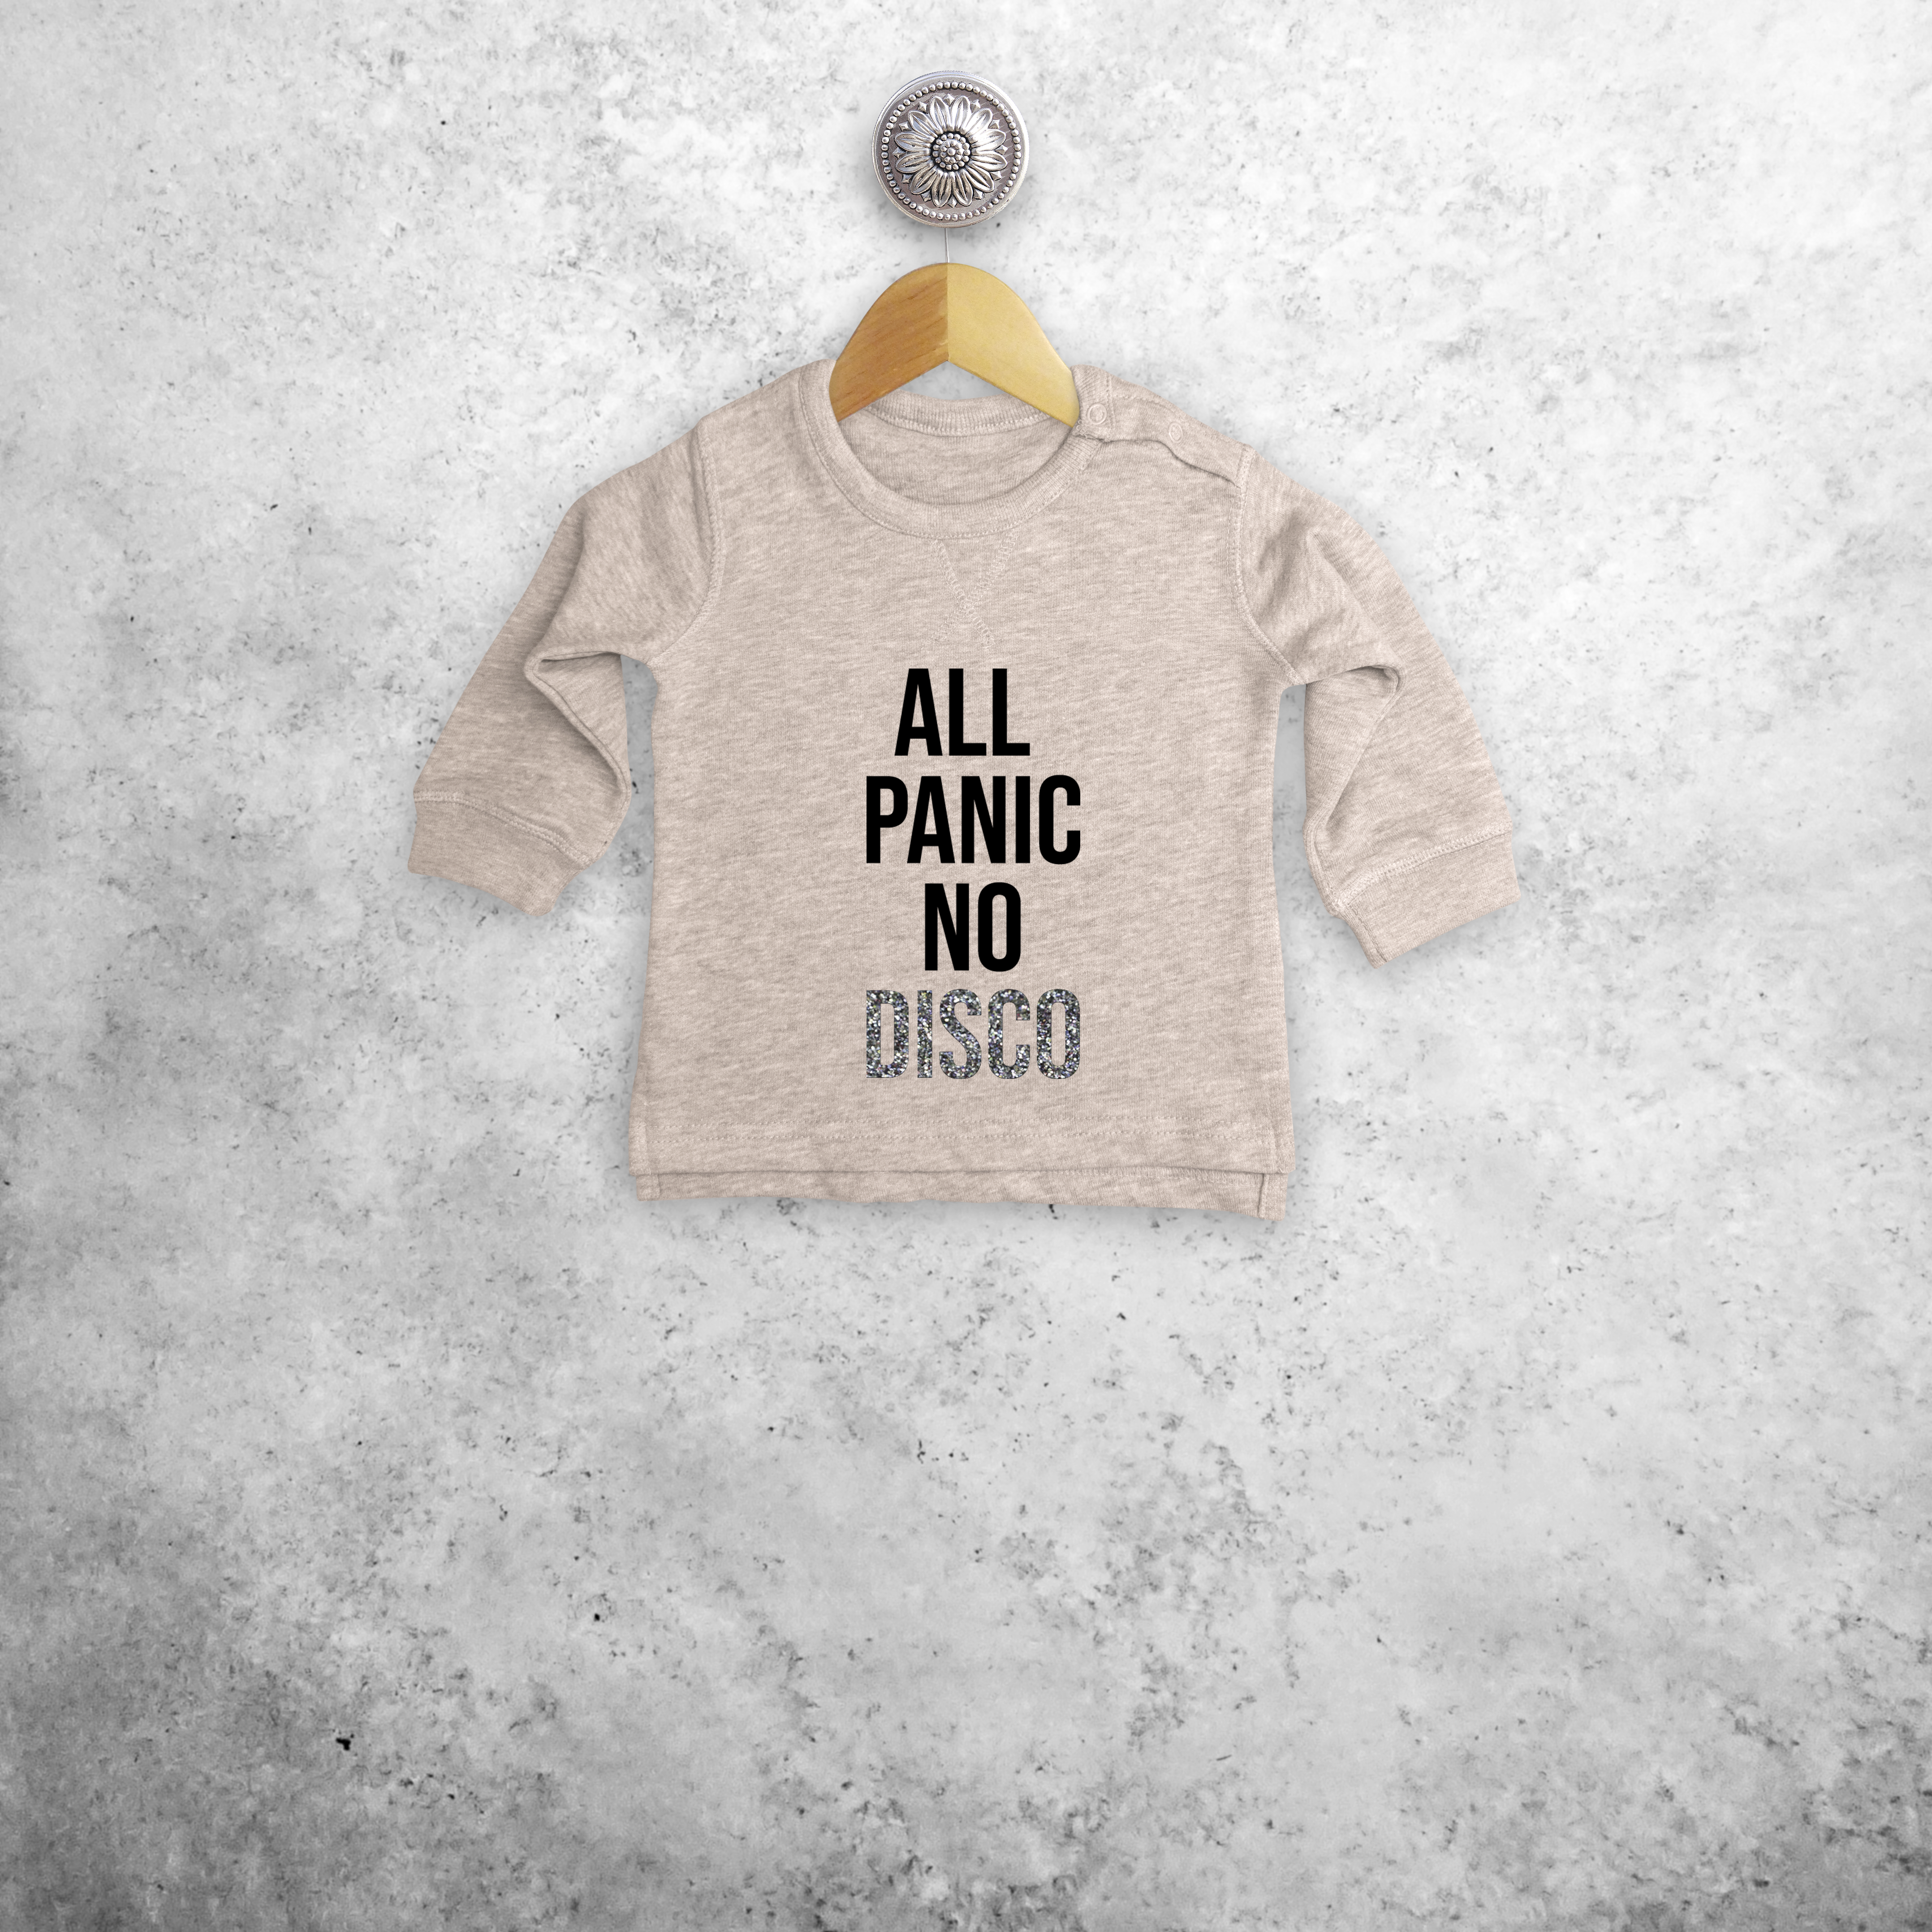 'All panic no disco' baby sweater